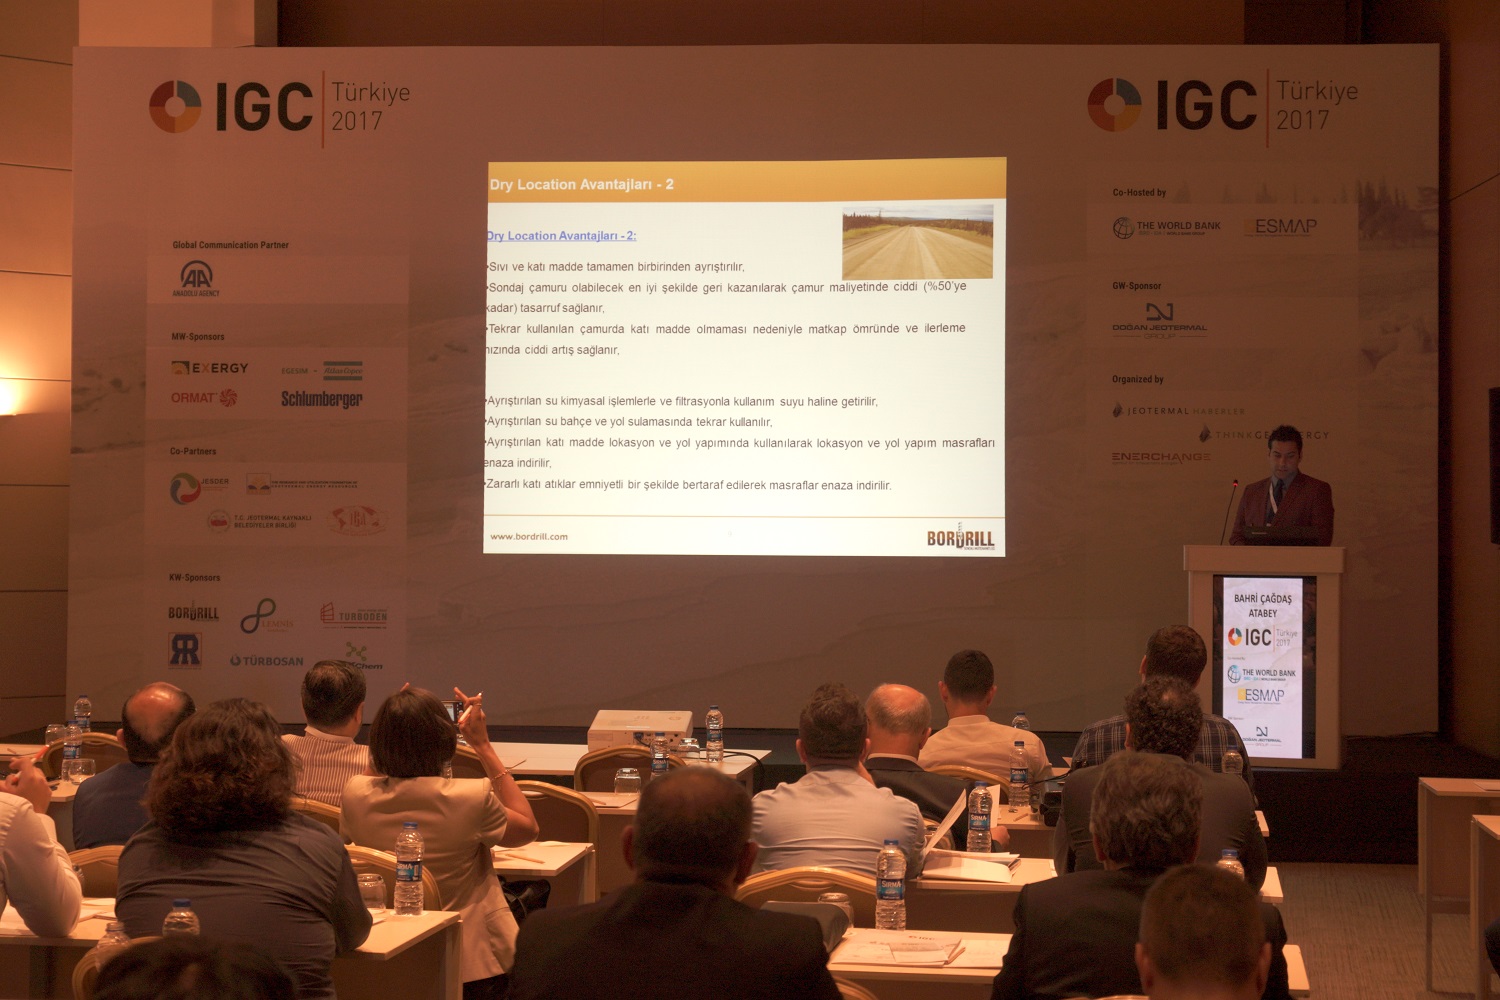 IGC Turkey 2017 – "Dry Location at Geothermal Drilling" Presentation